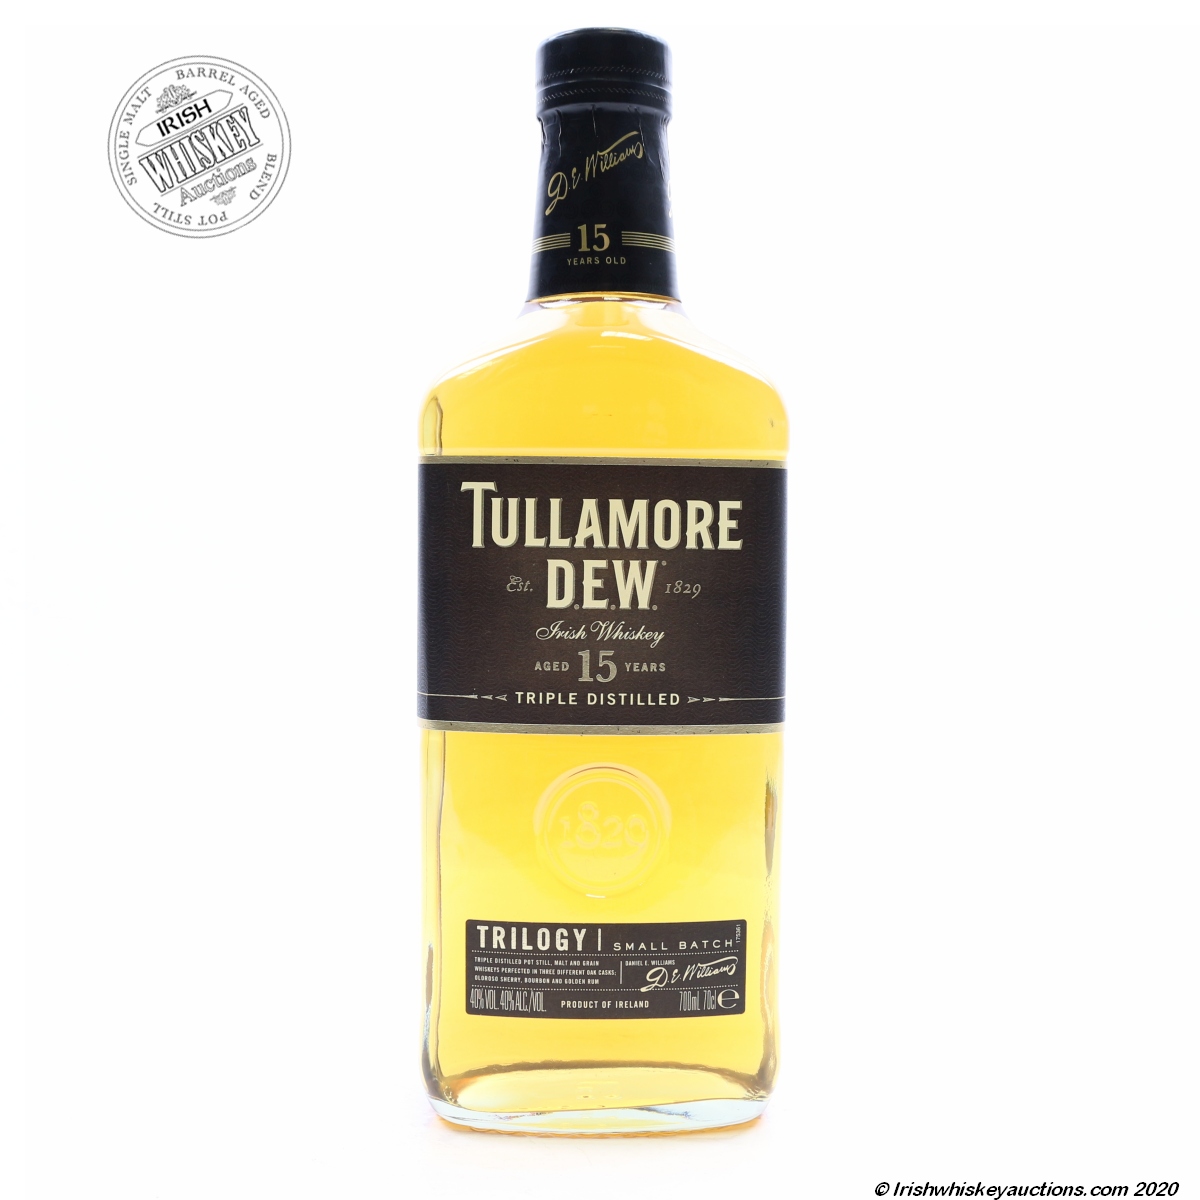 Irish Whiskey Auctions | Tullamore DEW 15 Year old Trilogy